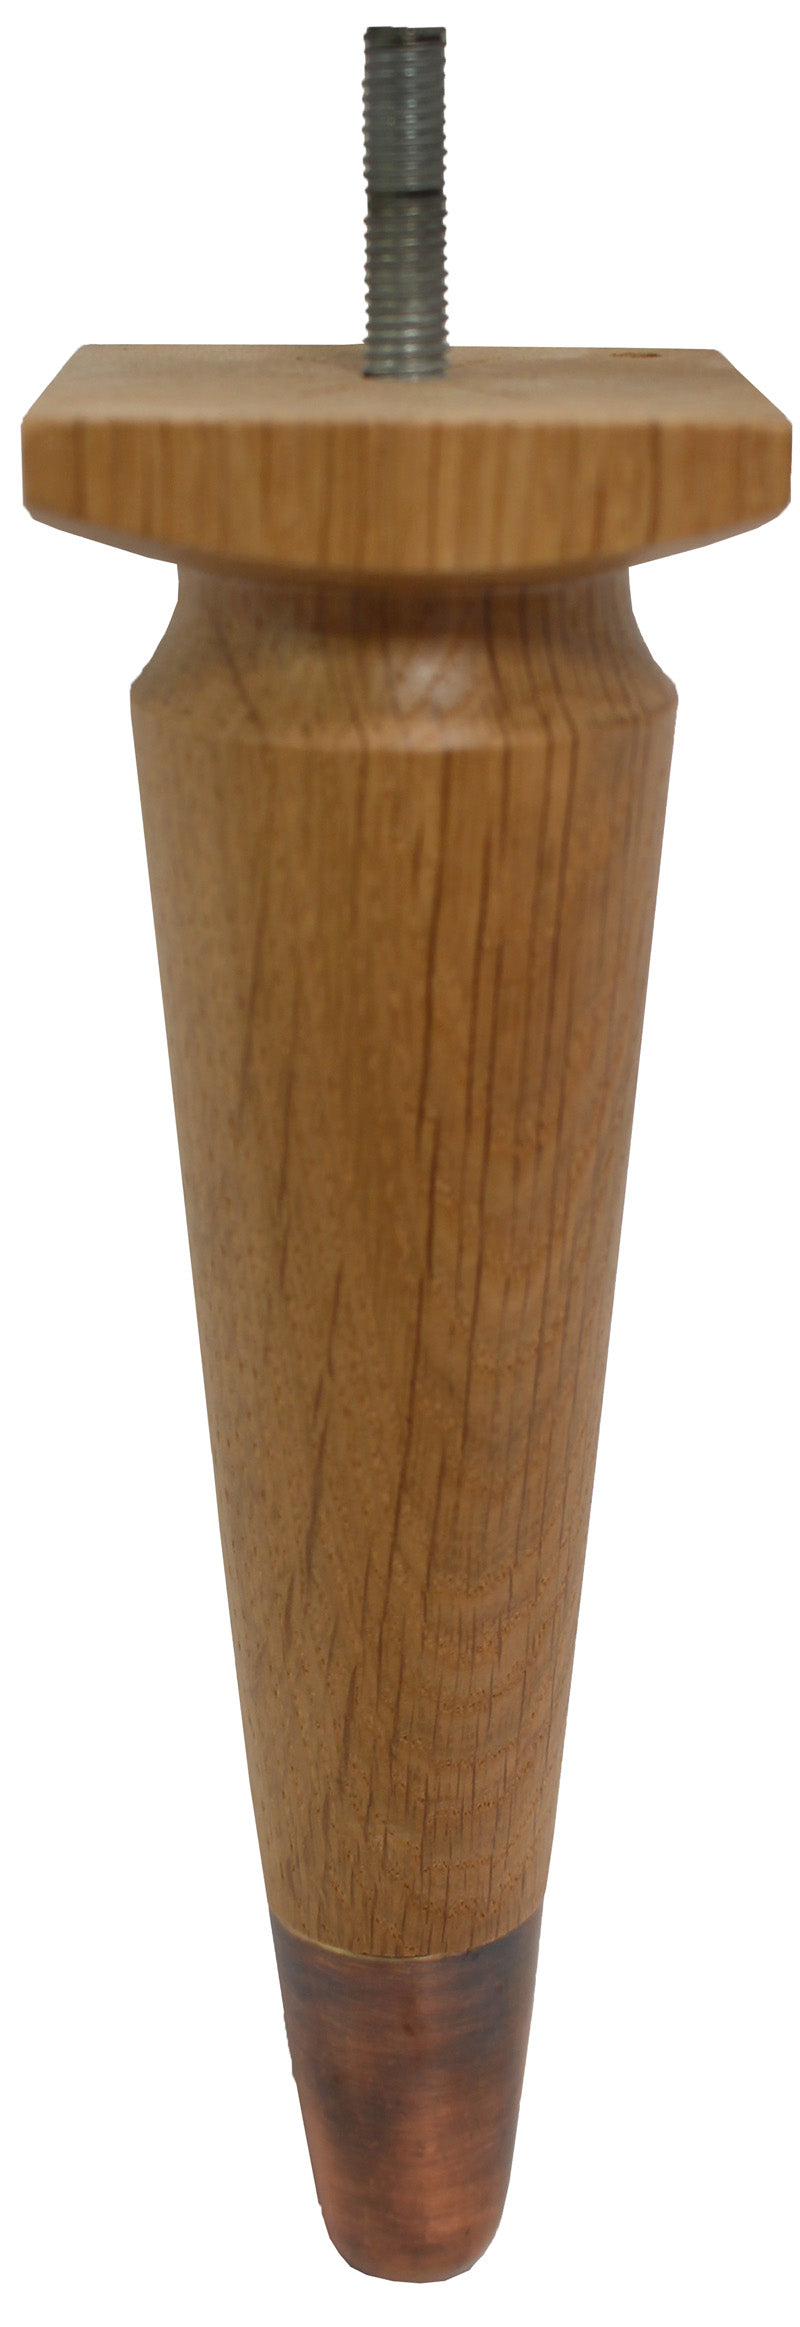 Thelma Solid Oak Furniture Legs - Natural Finish - Antique Copper Slipper Cups - Set of 4